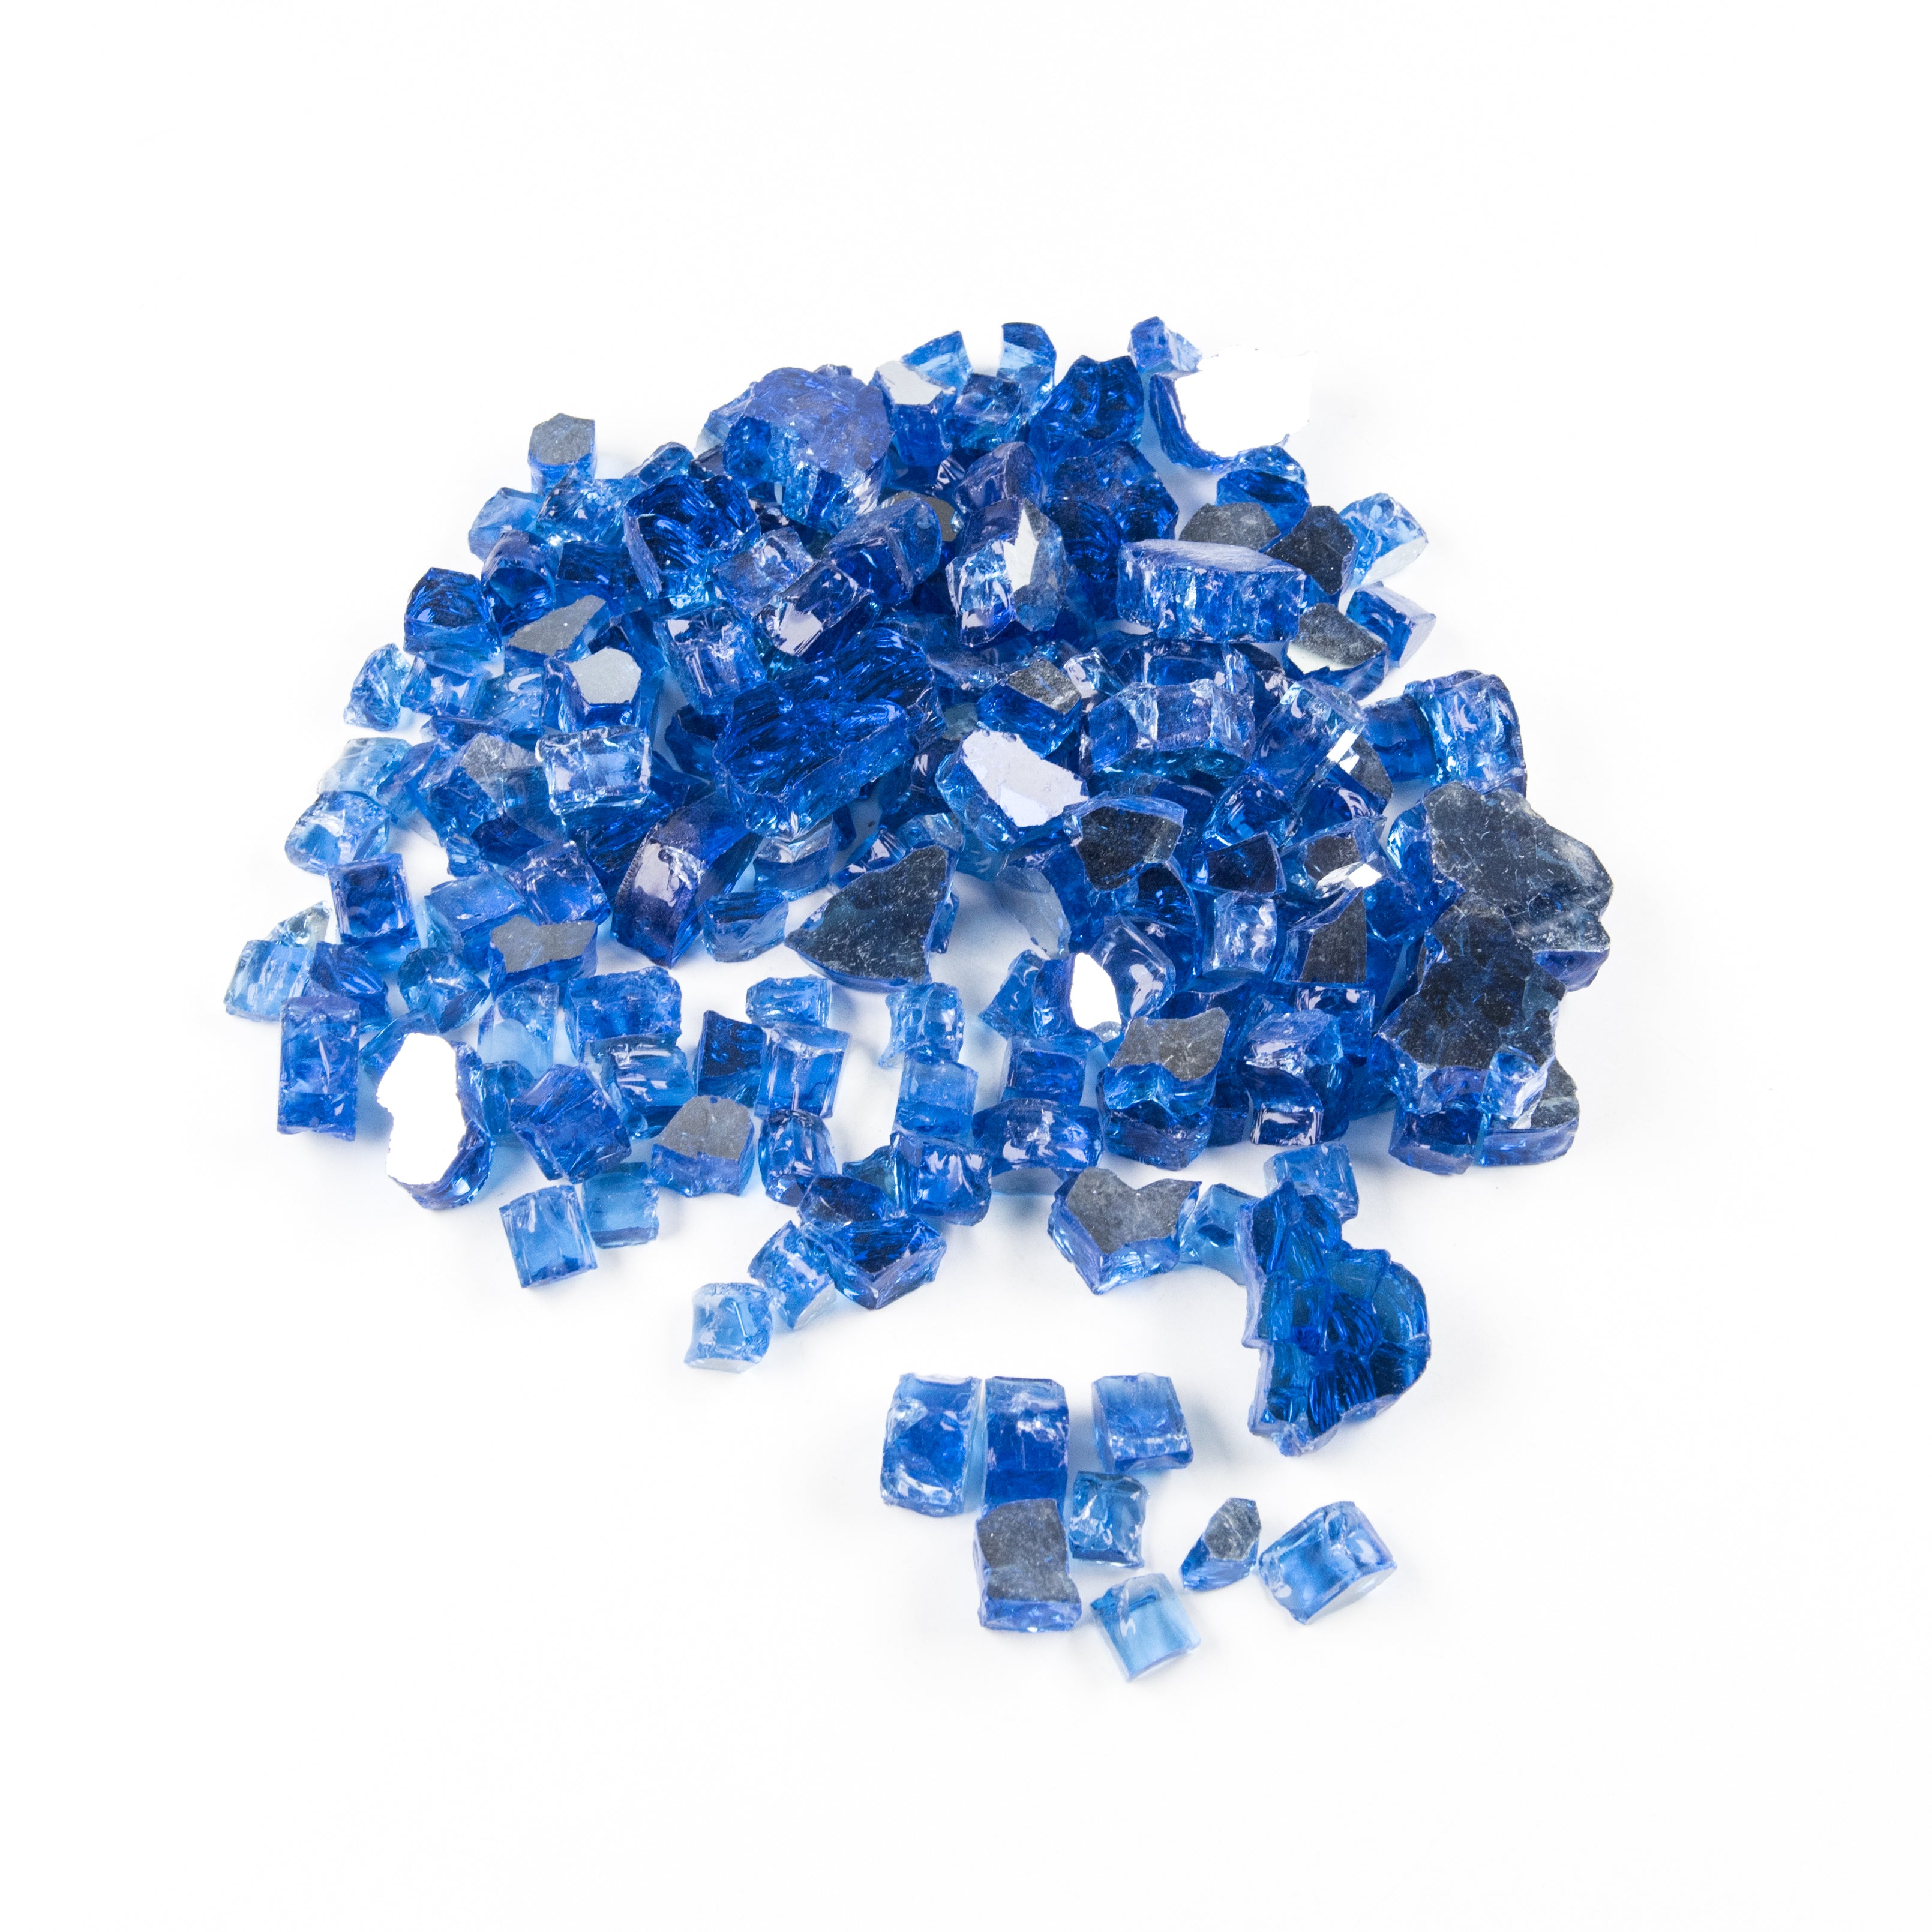 Cobalt Aqua Blue - Fire Glass 1/2" Premium Tempered Reflective Fireglass